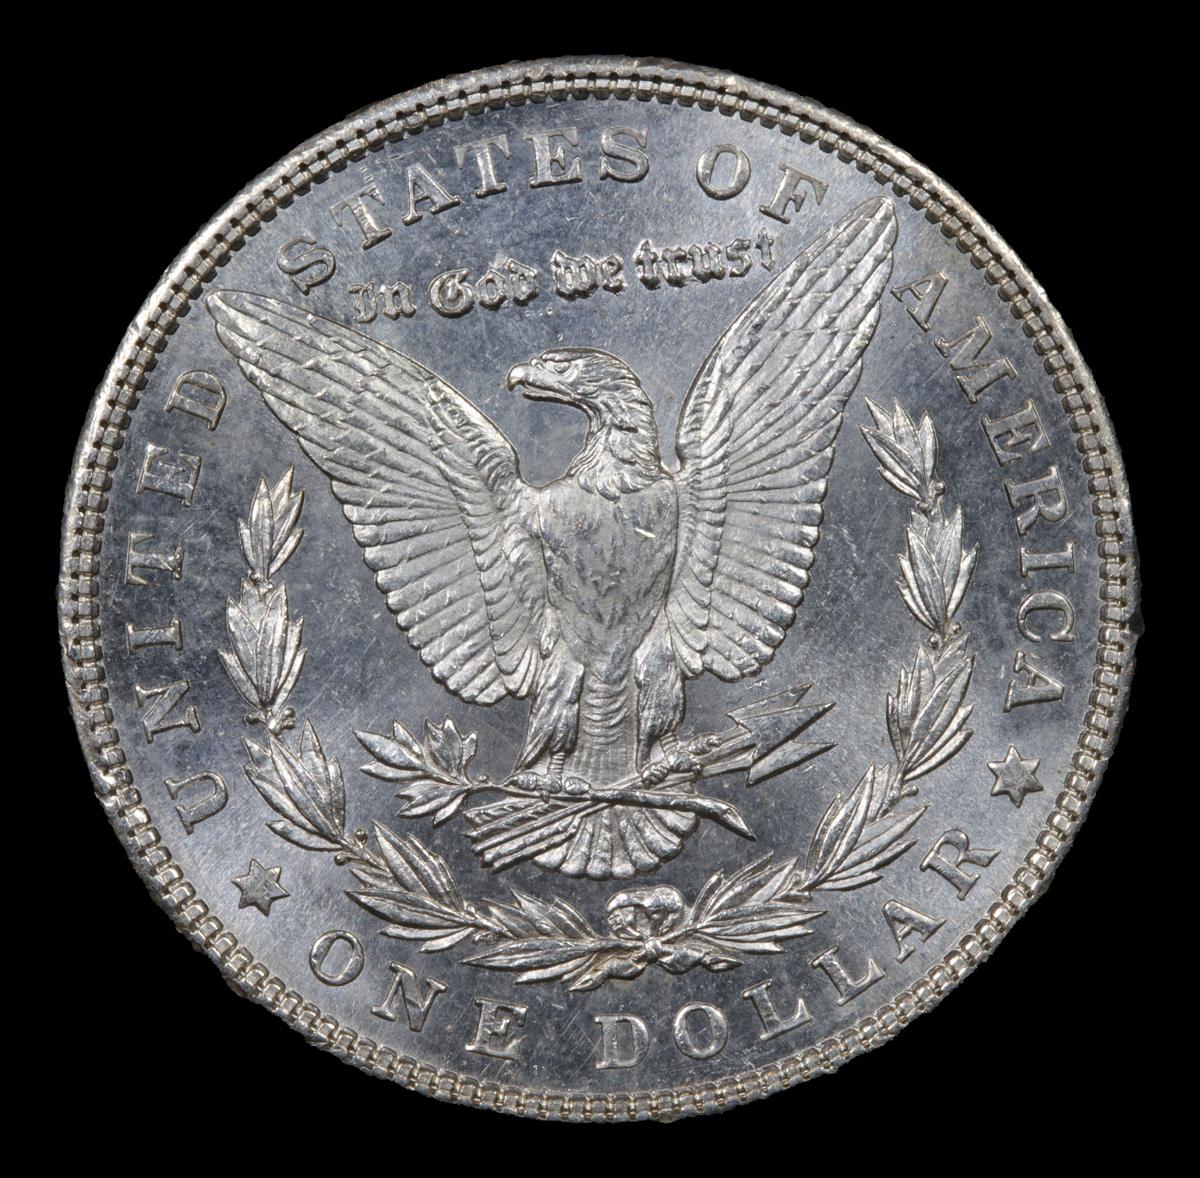 ***Auction Highlight*** 1903-p Morgan Dollar $1 Graded Choice Unc+ PL By USCG (fc)